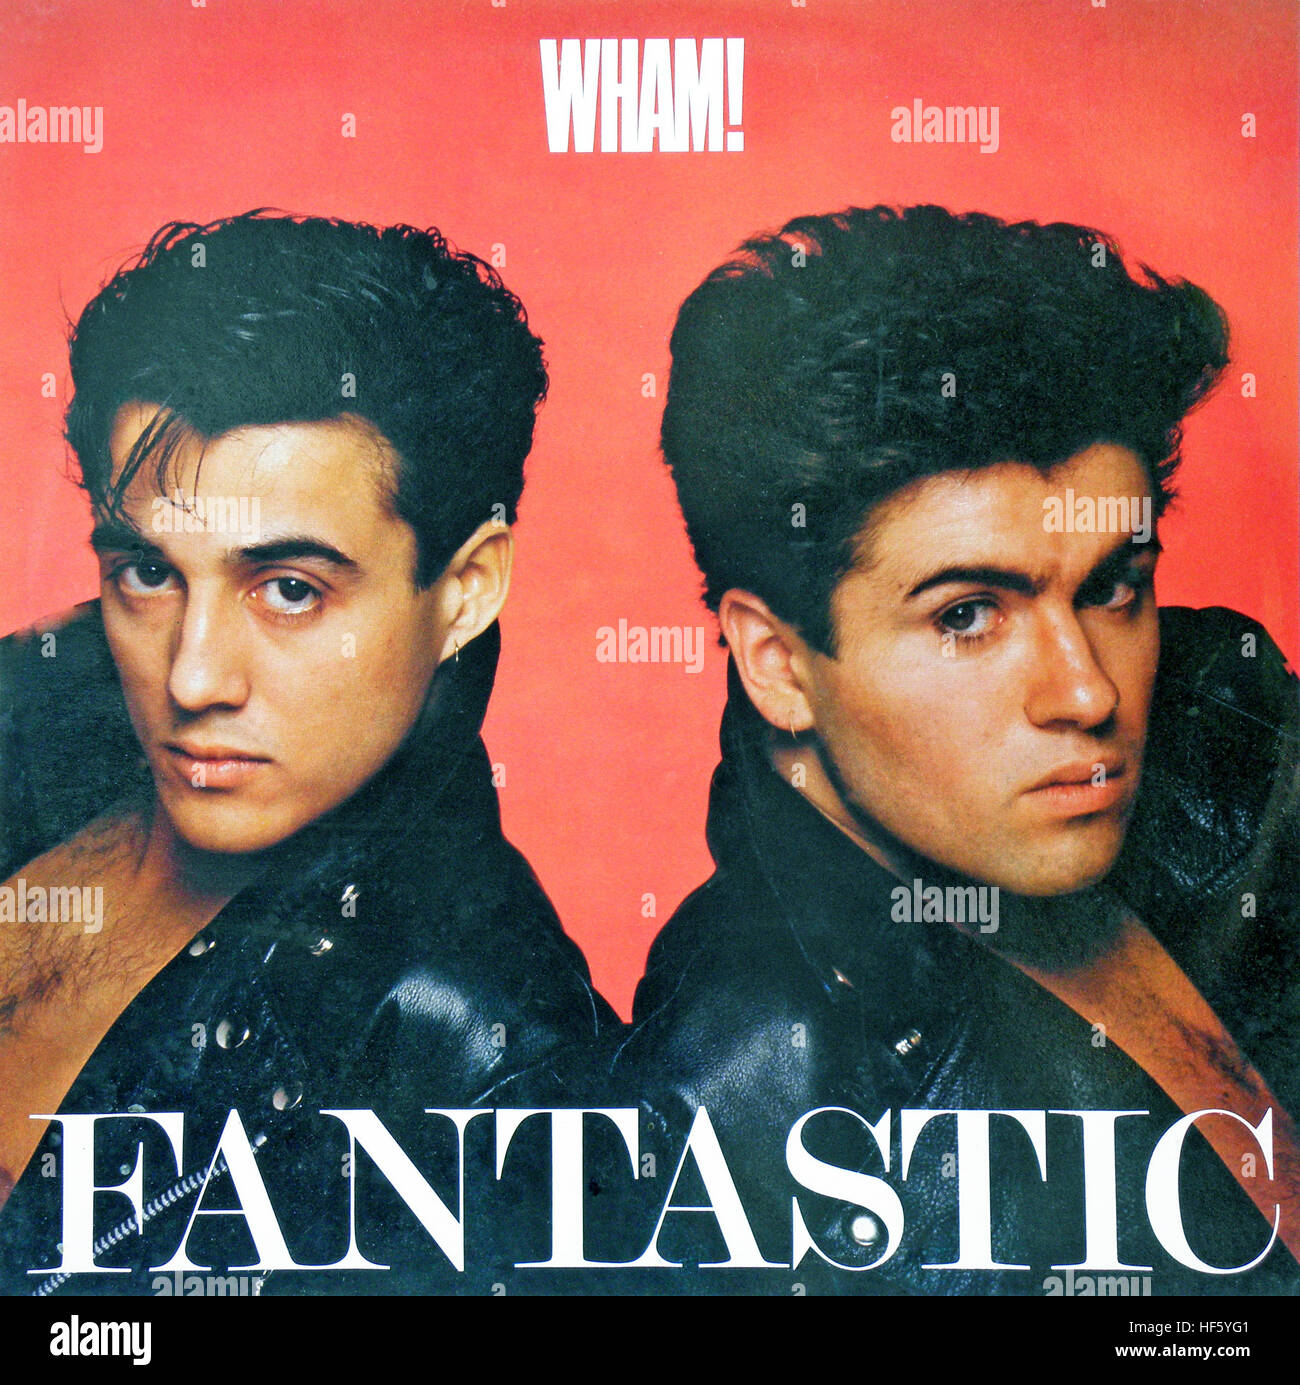 Wham! LP "fantástico", gramófono portada, George Michael y Andrew Ridgeley, 1983. Foto de stock